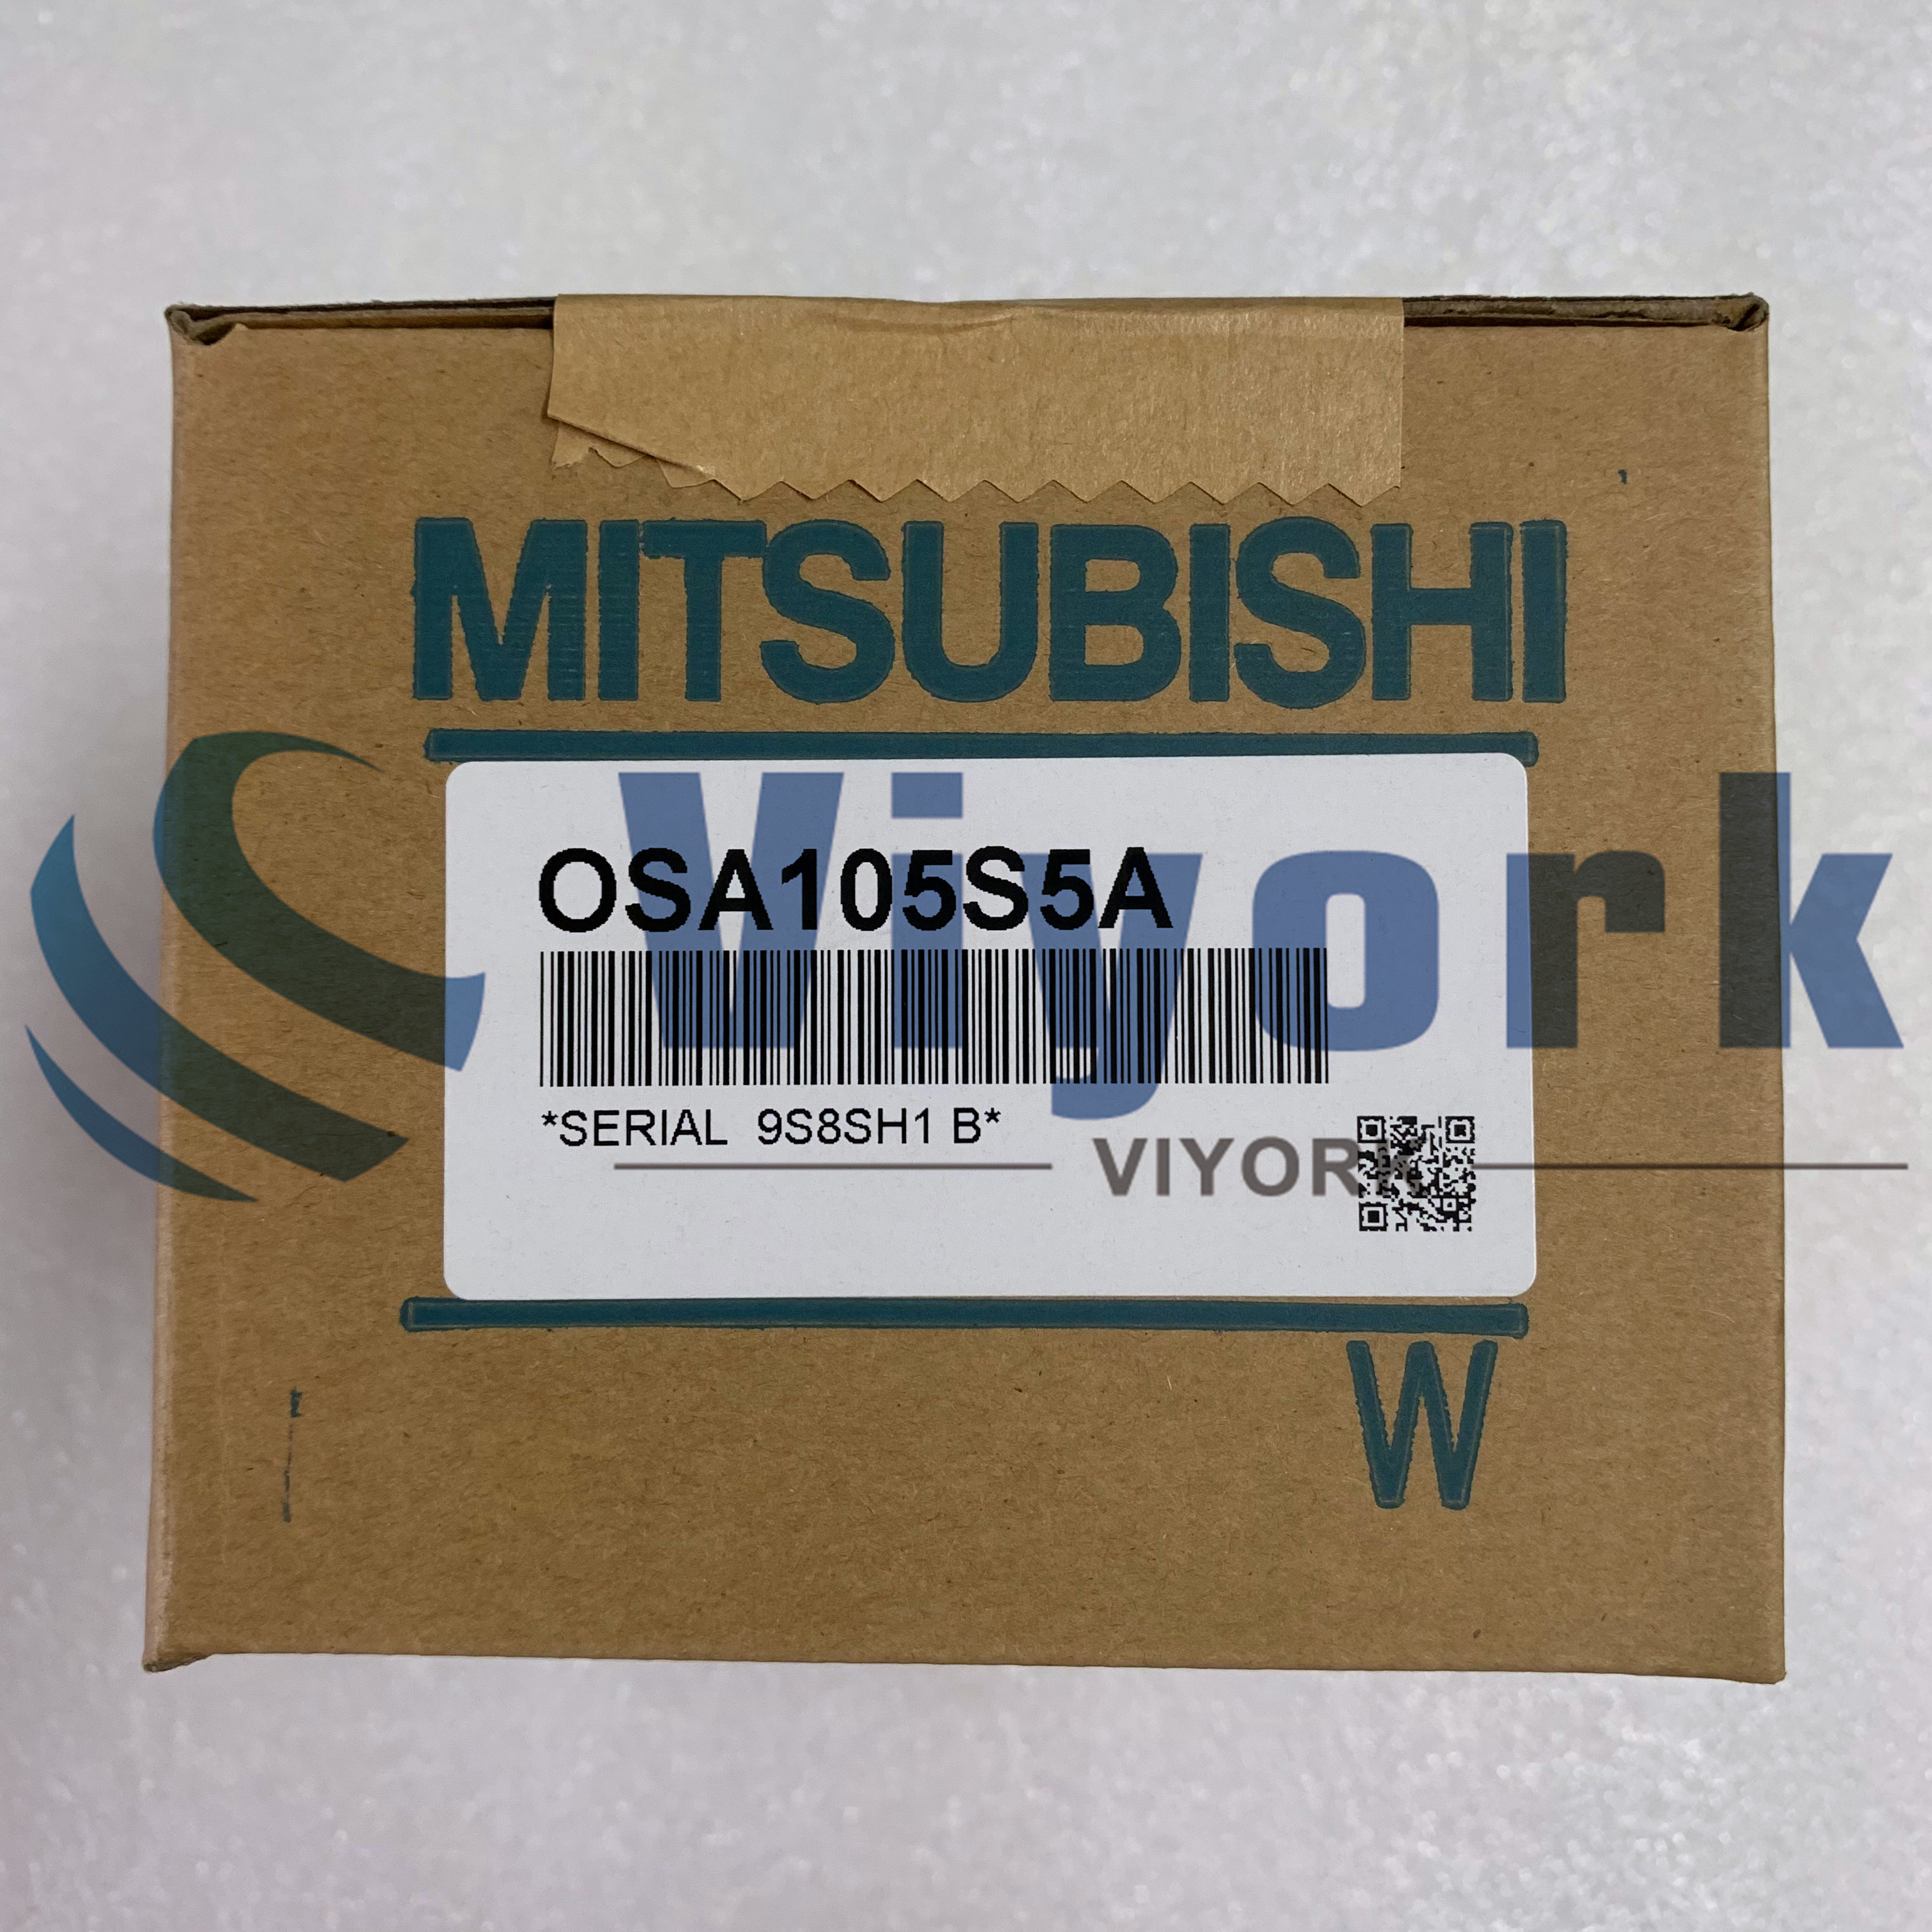 Mitsubishi OSA105S5A SERVO ENCODER ROTARY NEW